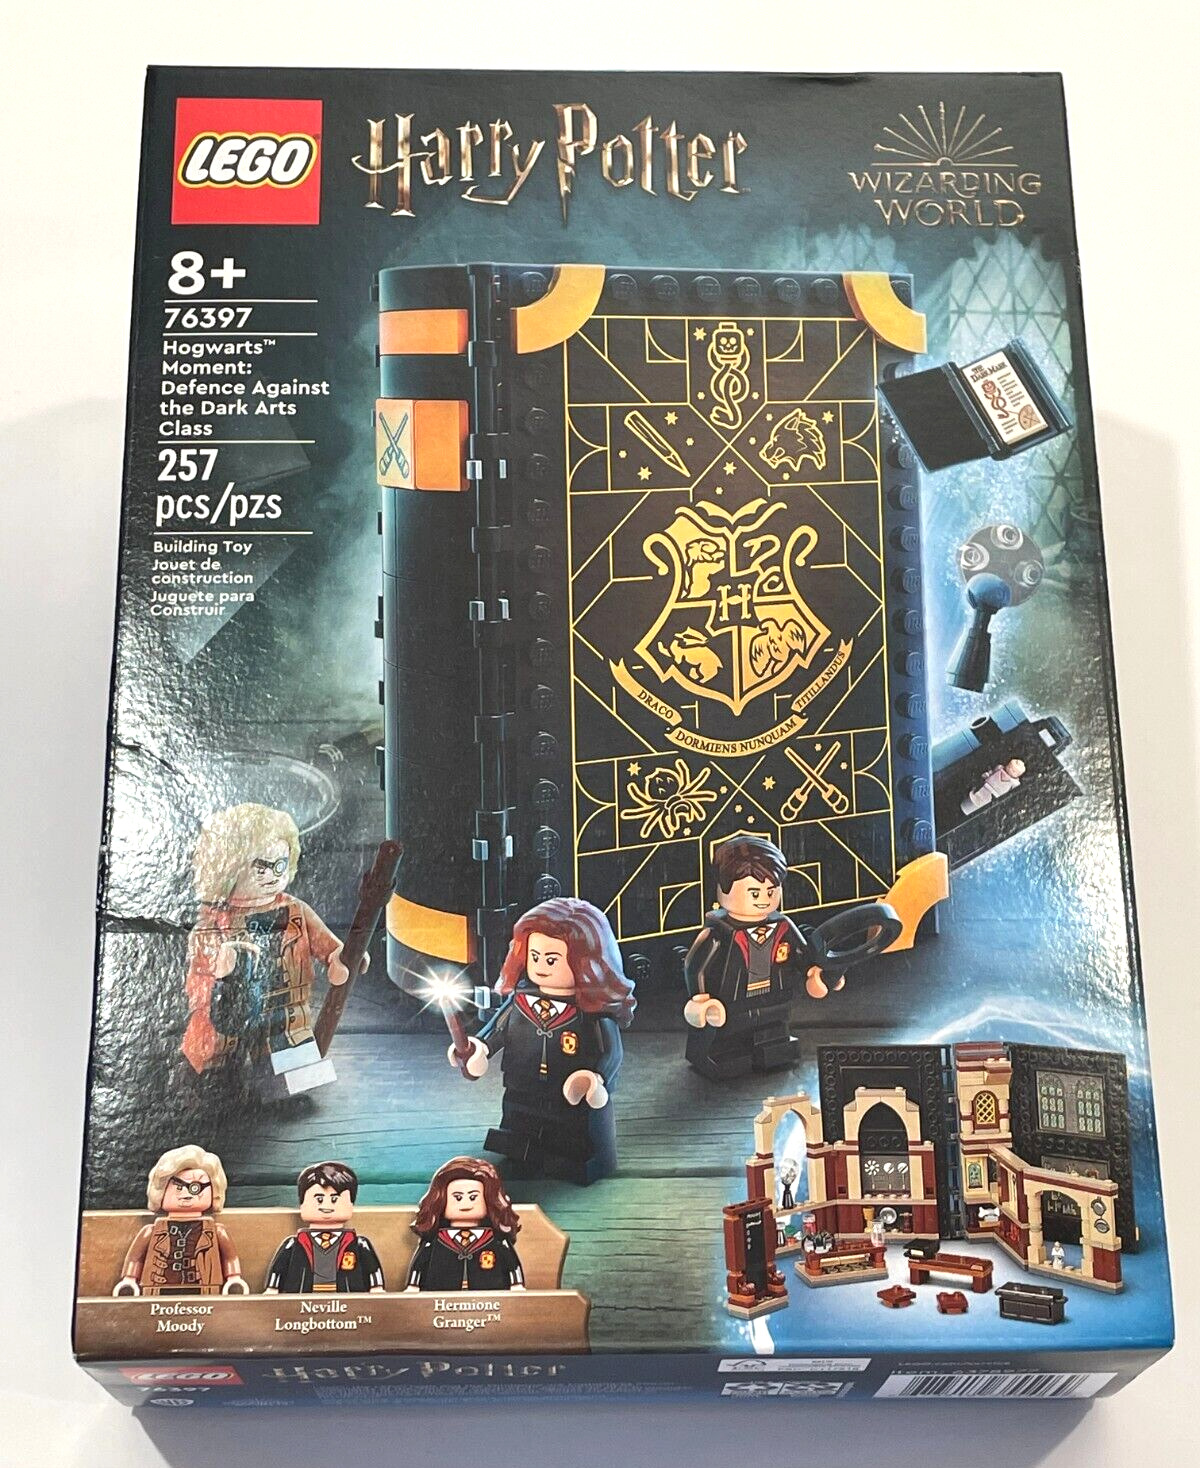 Lego Harry Potter Set 76397 Hogwarts Moment Defense Against Dark Arts Class